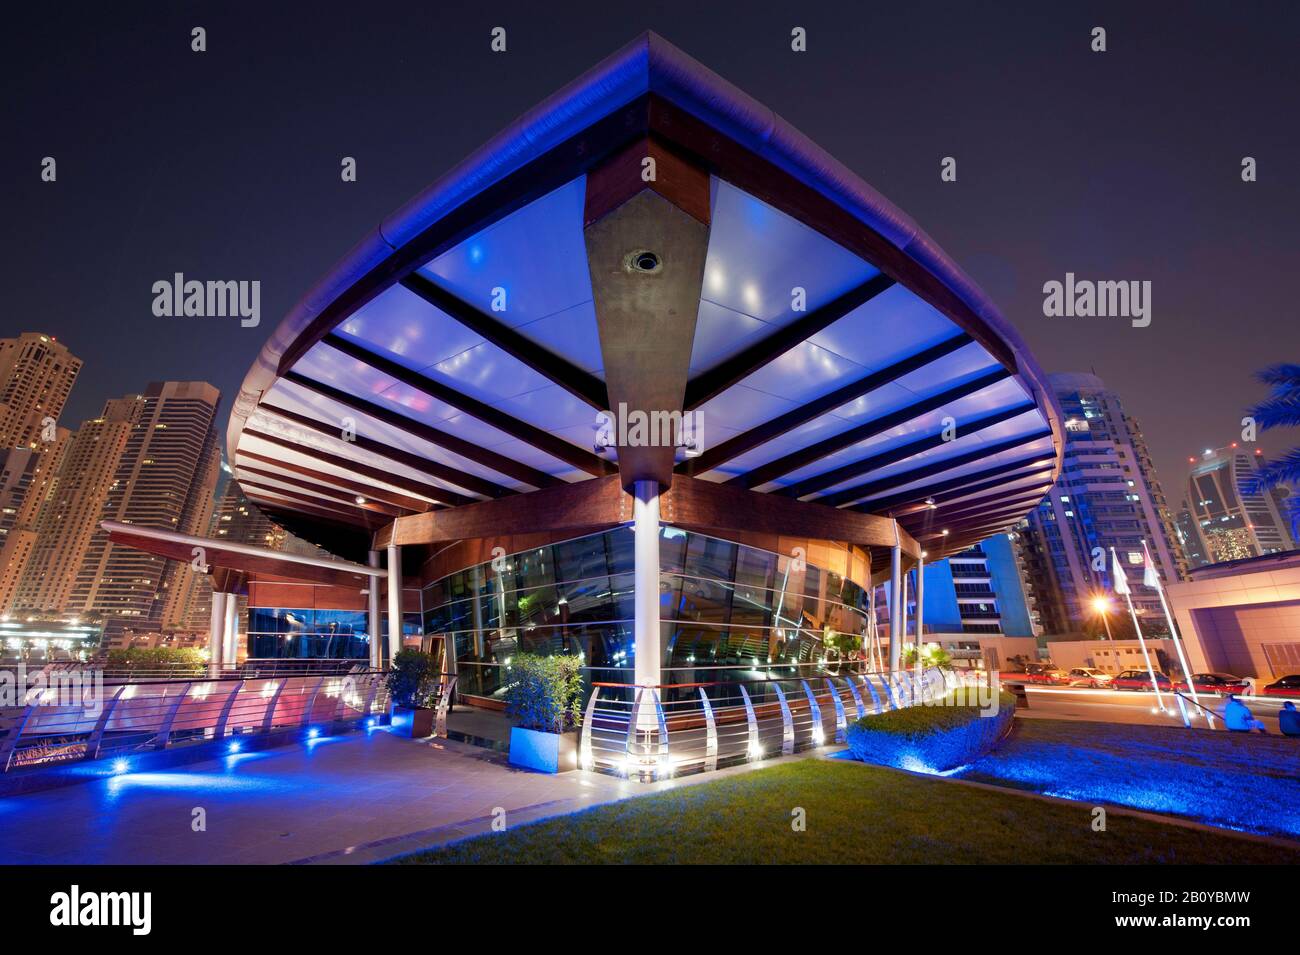 Dubai marina club at night hi-res stock photography and images - Alamy